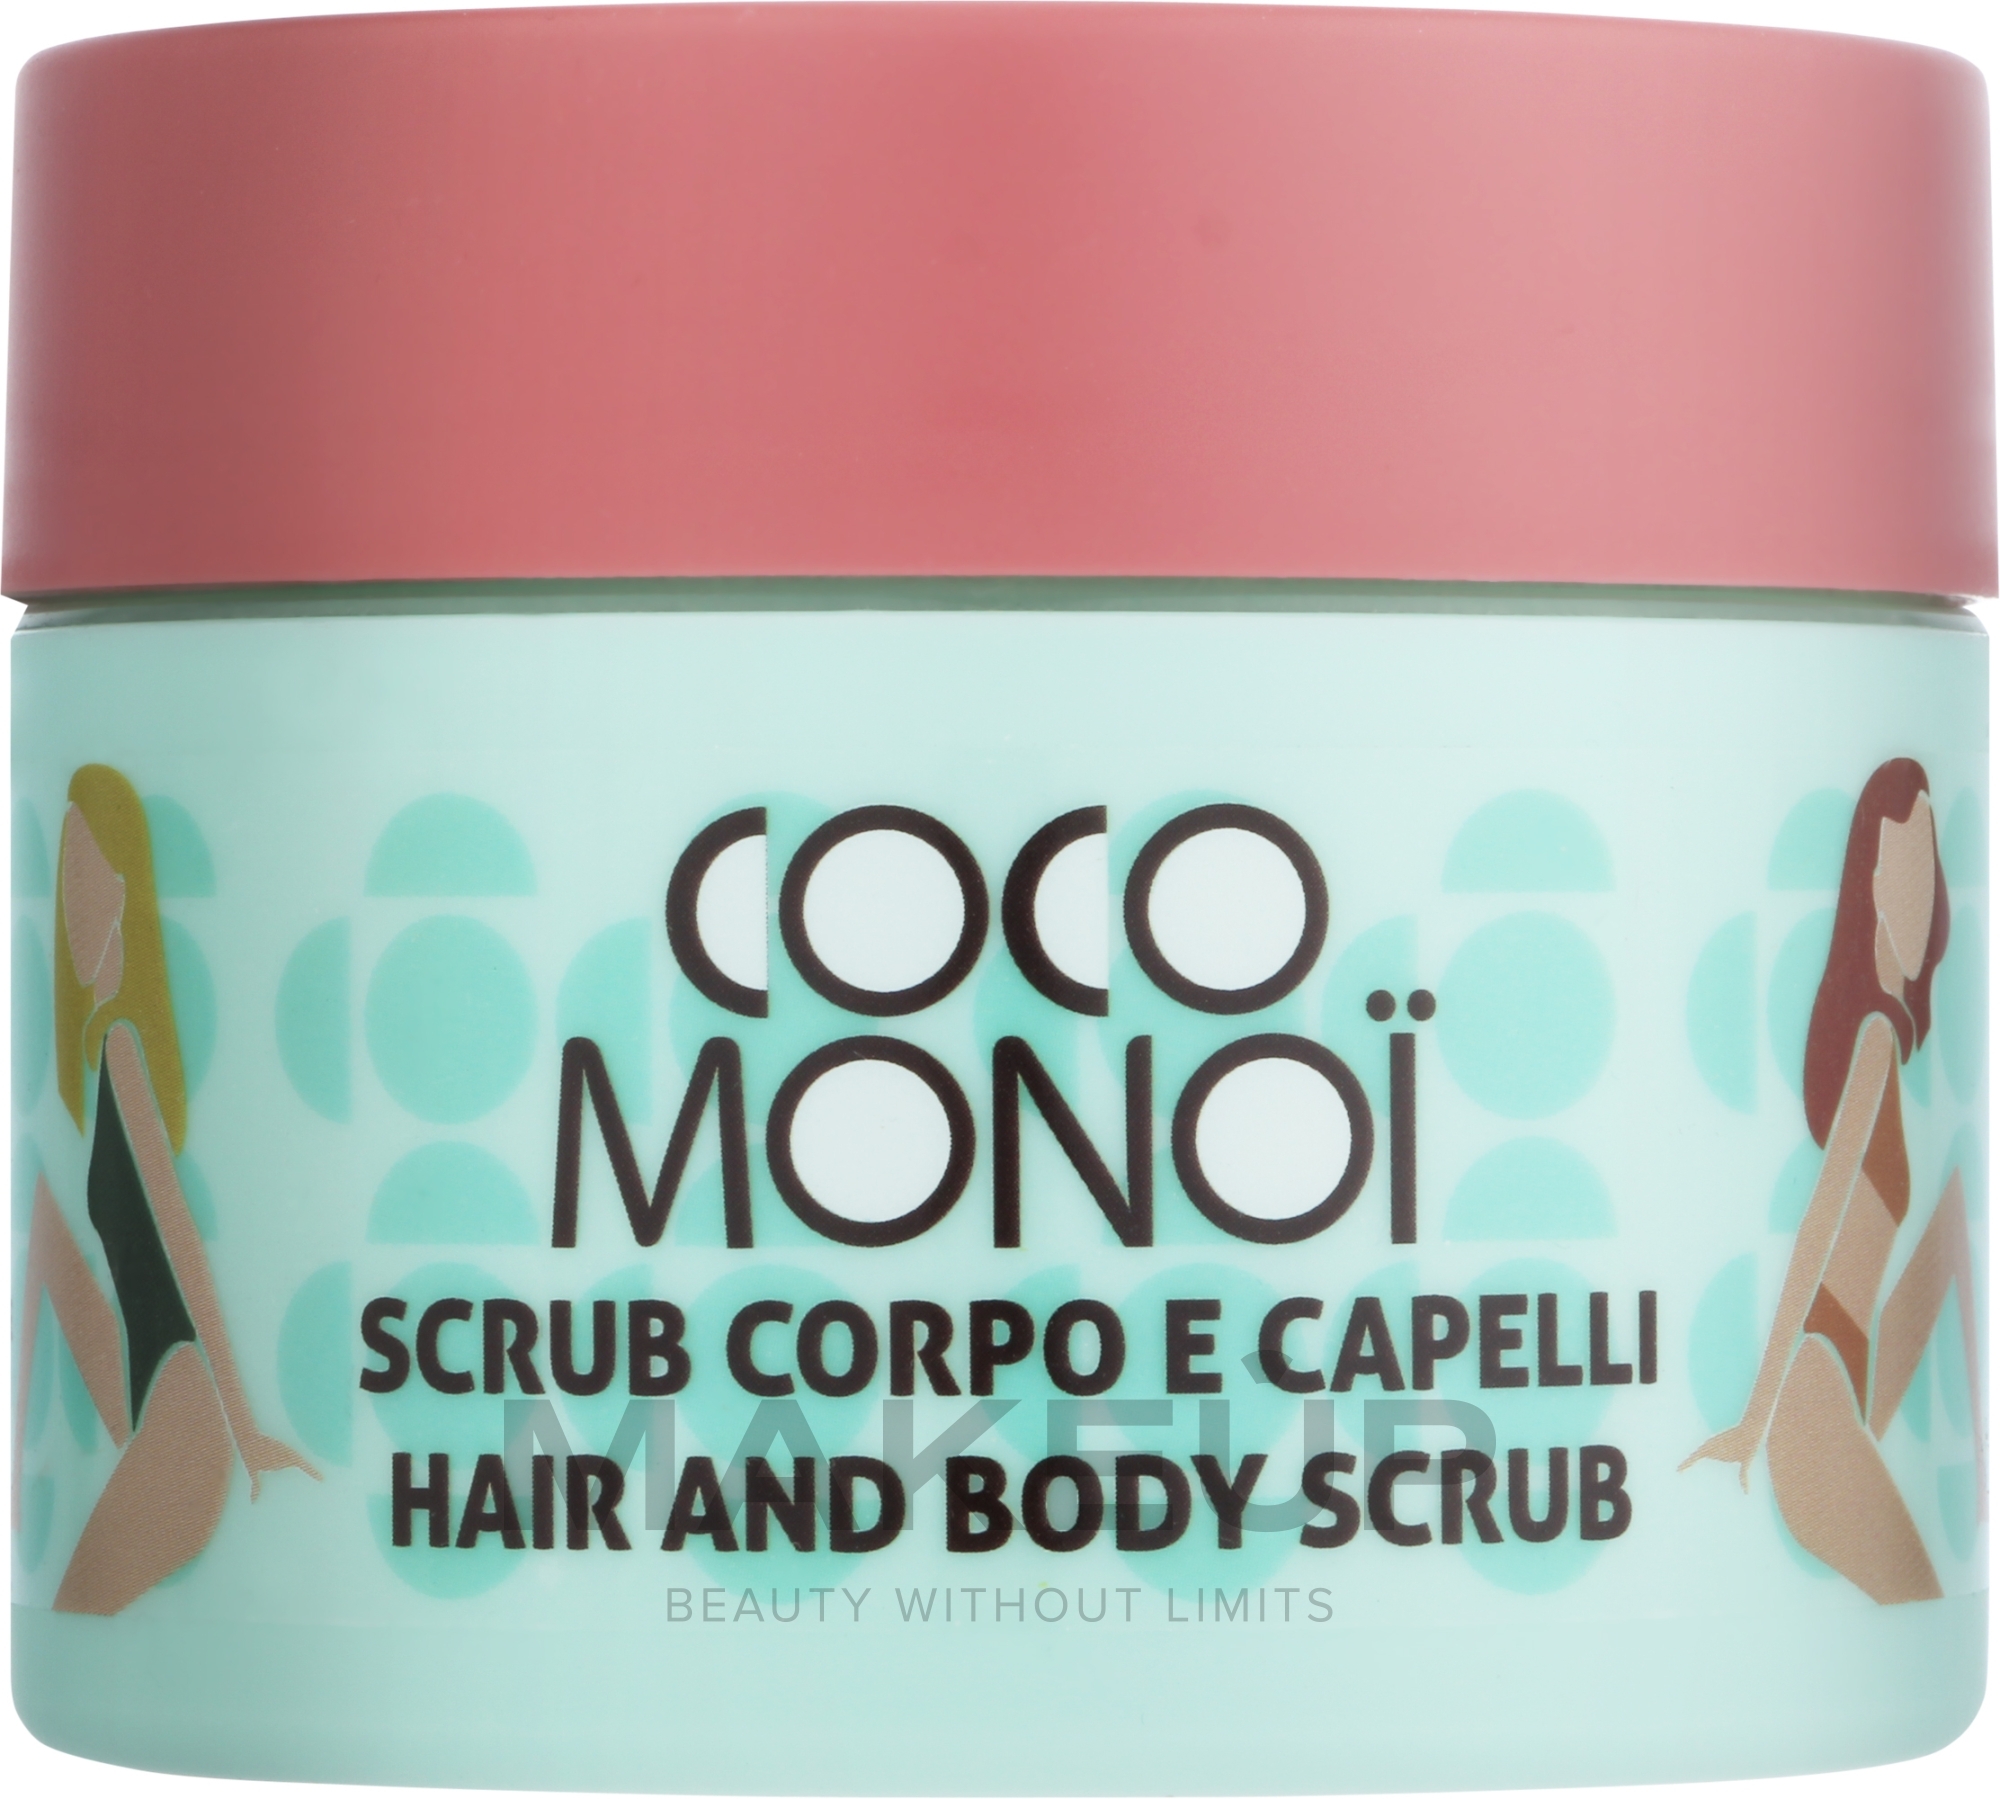 Скраб для волос и тела - Coco Monoi Hair And Body Scrub  — фото 250ml